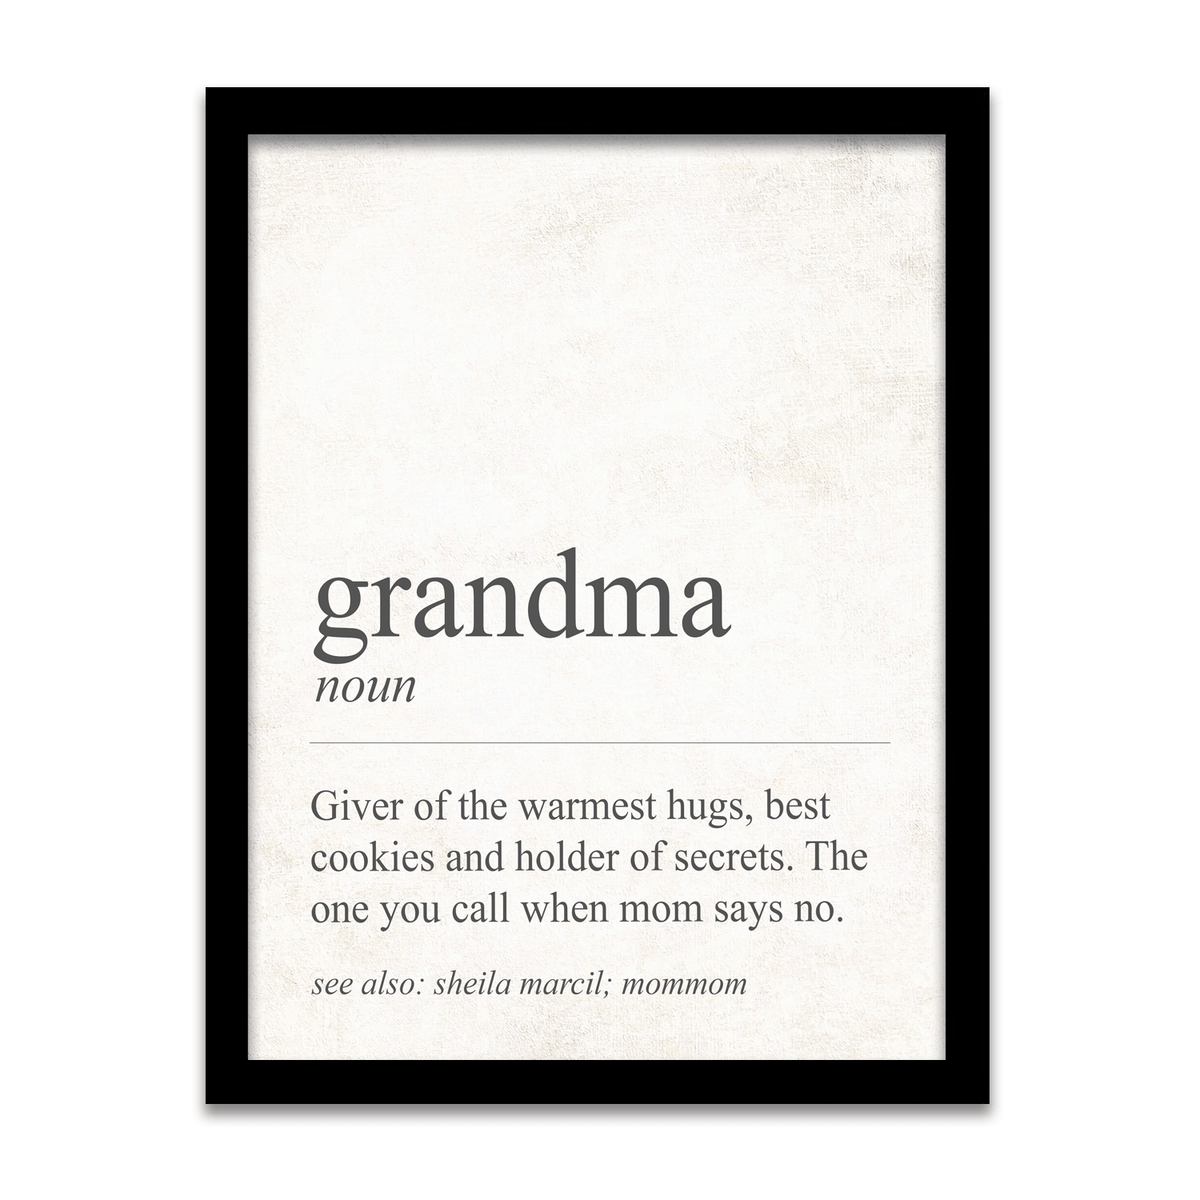 Personalized gift for grandma - Funny definition of Grandma